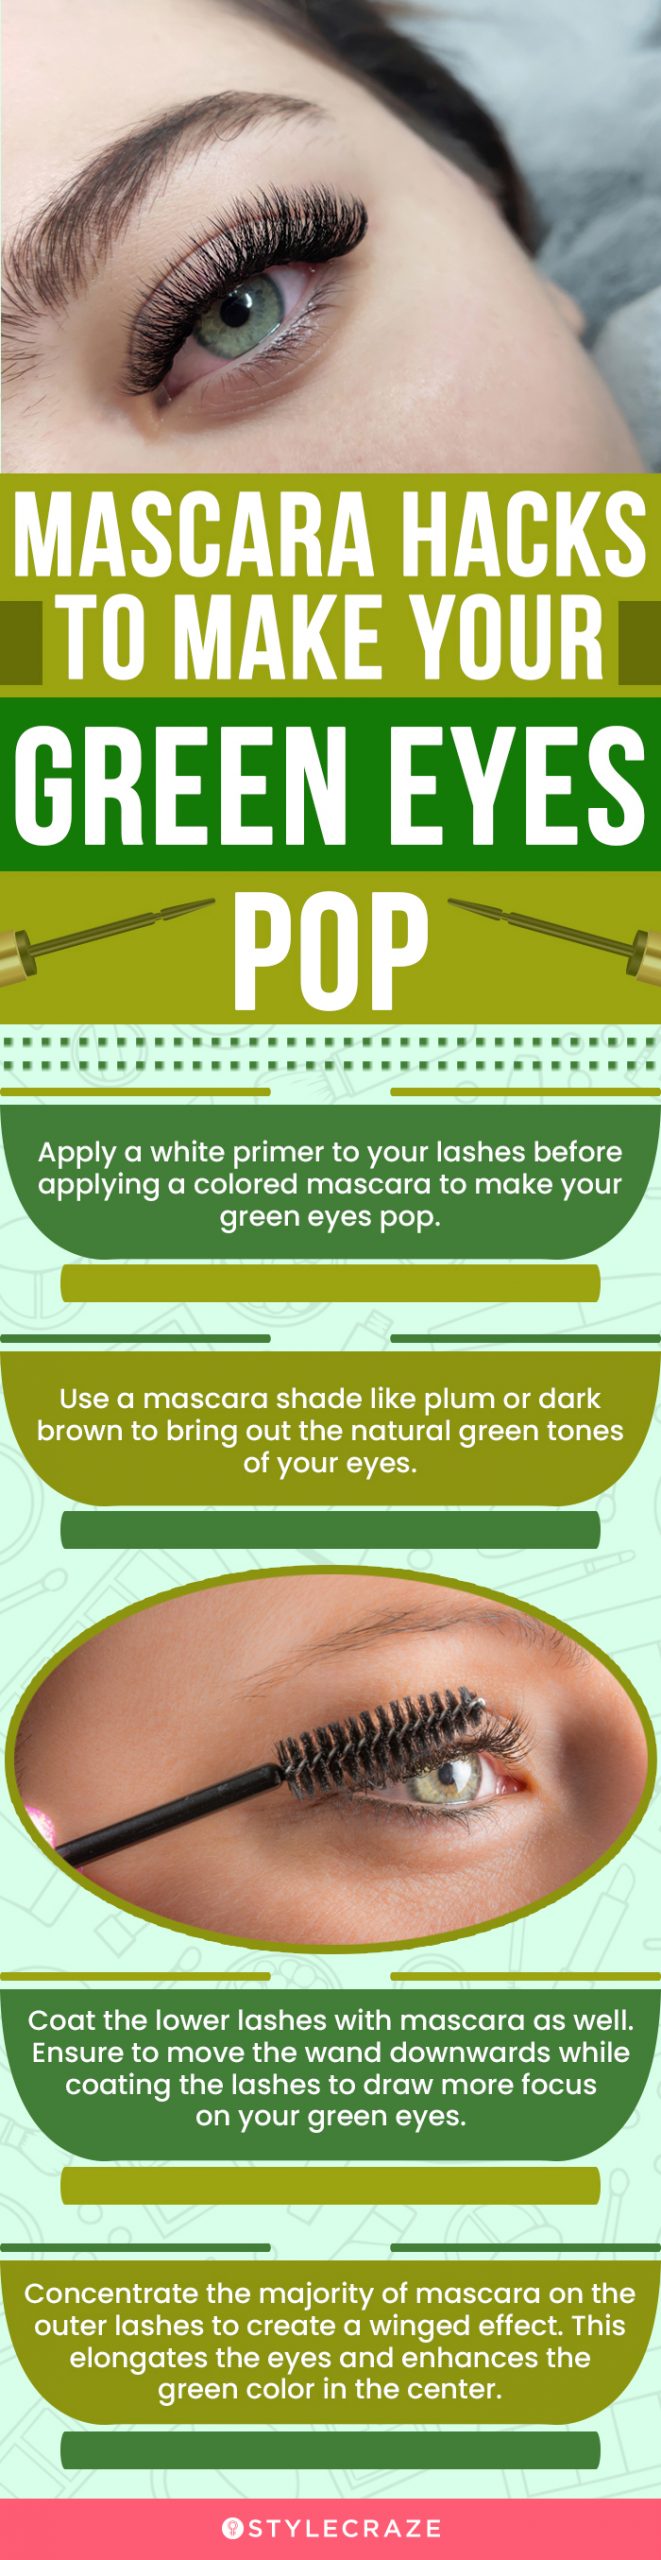 Mascara Hacks To Make Your Green Eyes Pop(infographic)